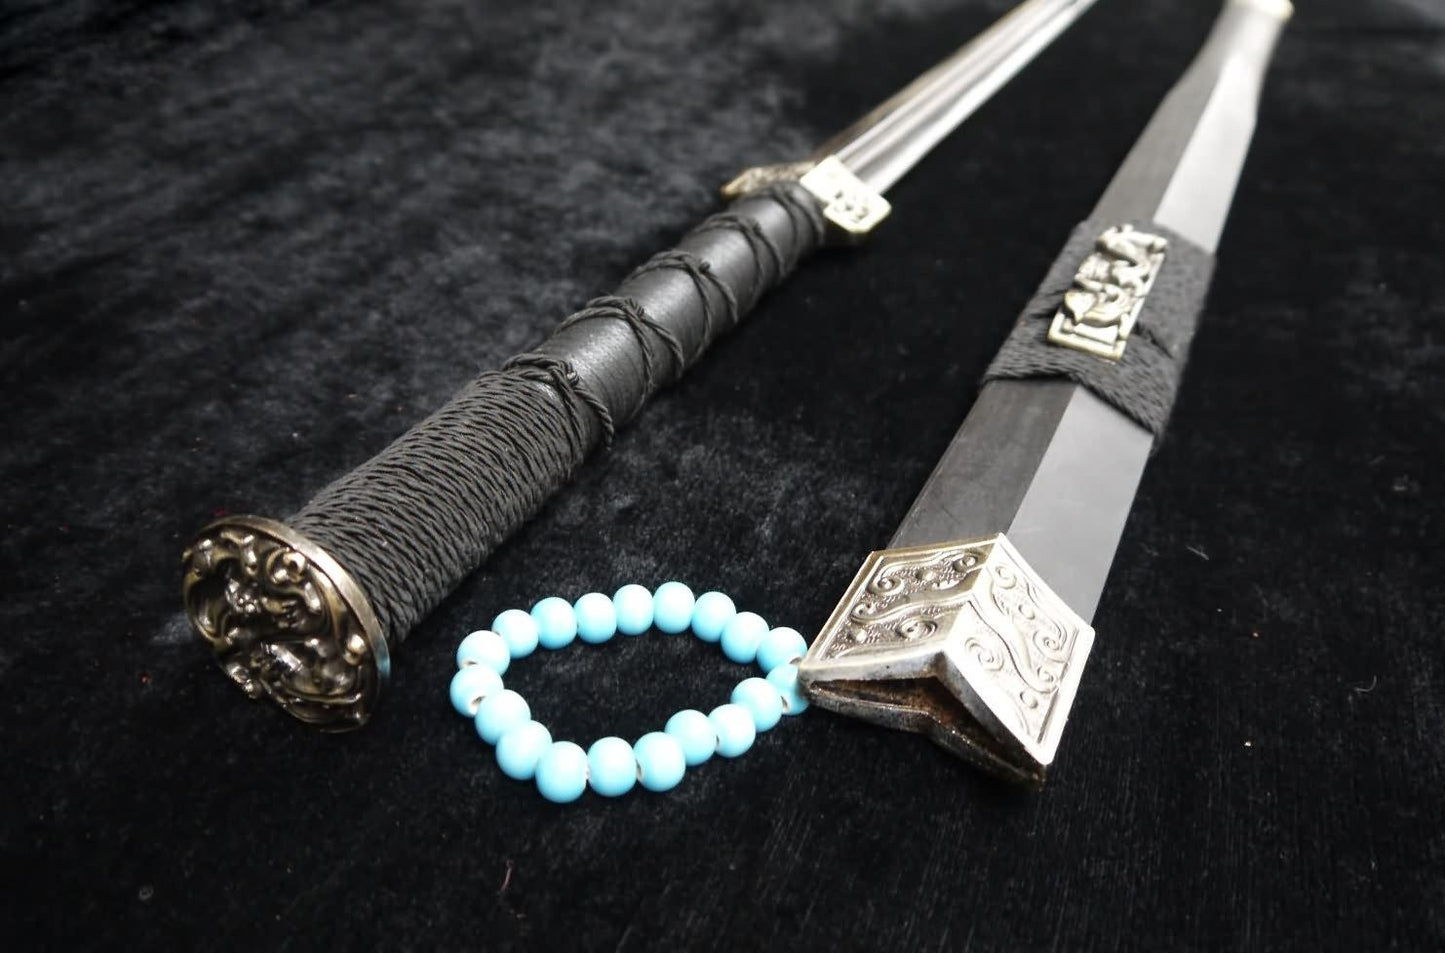 Han jian/Damascus steel Black Blade/Handmade/Black Wood scabbard/Alloy - Chinese sword shop